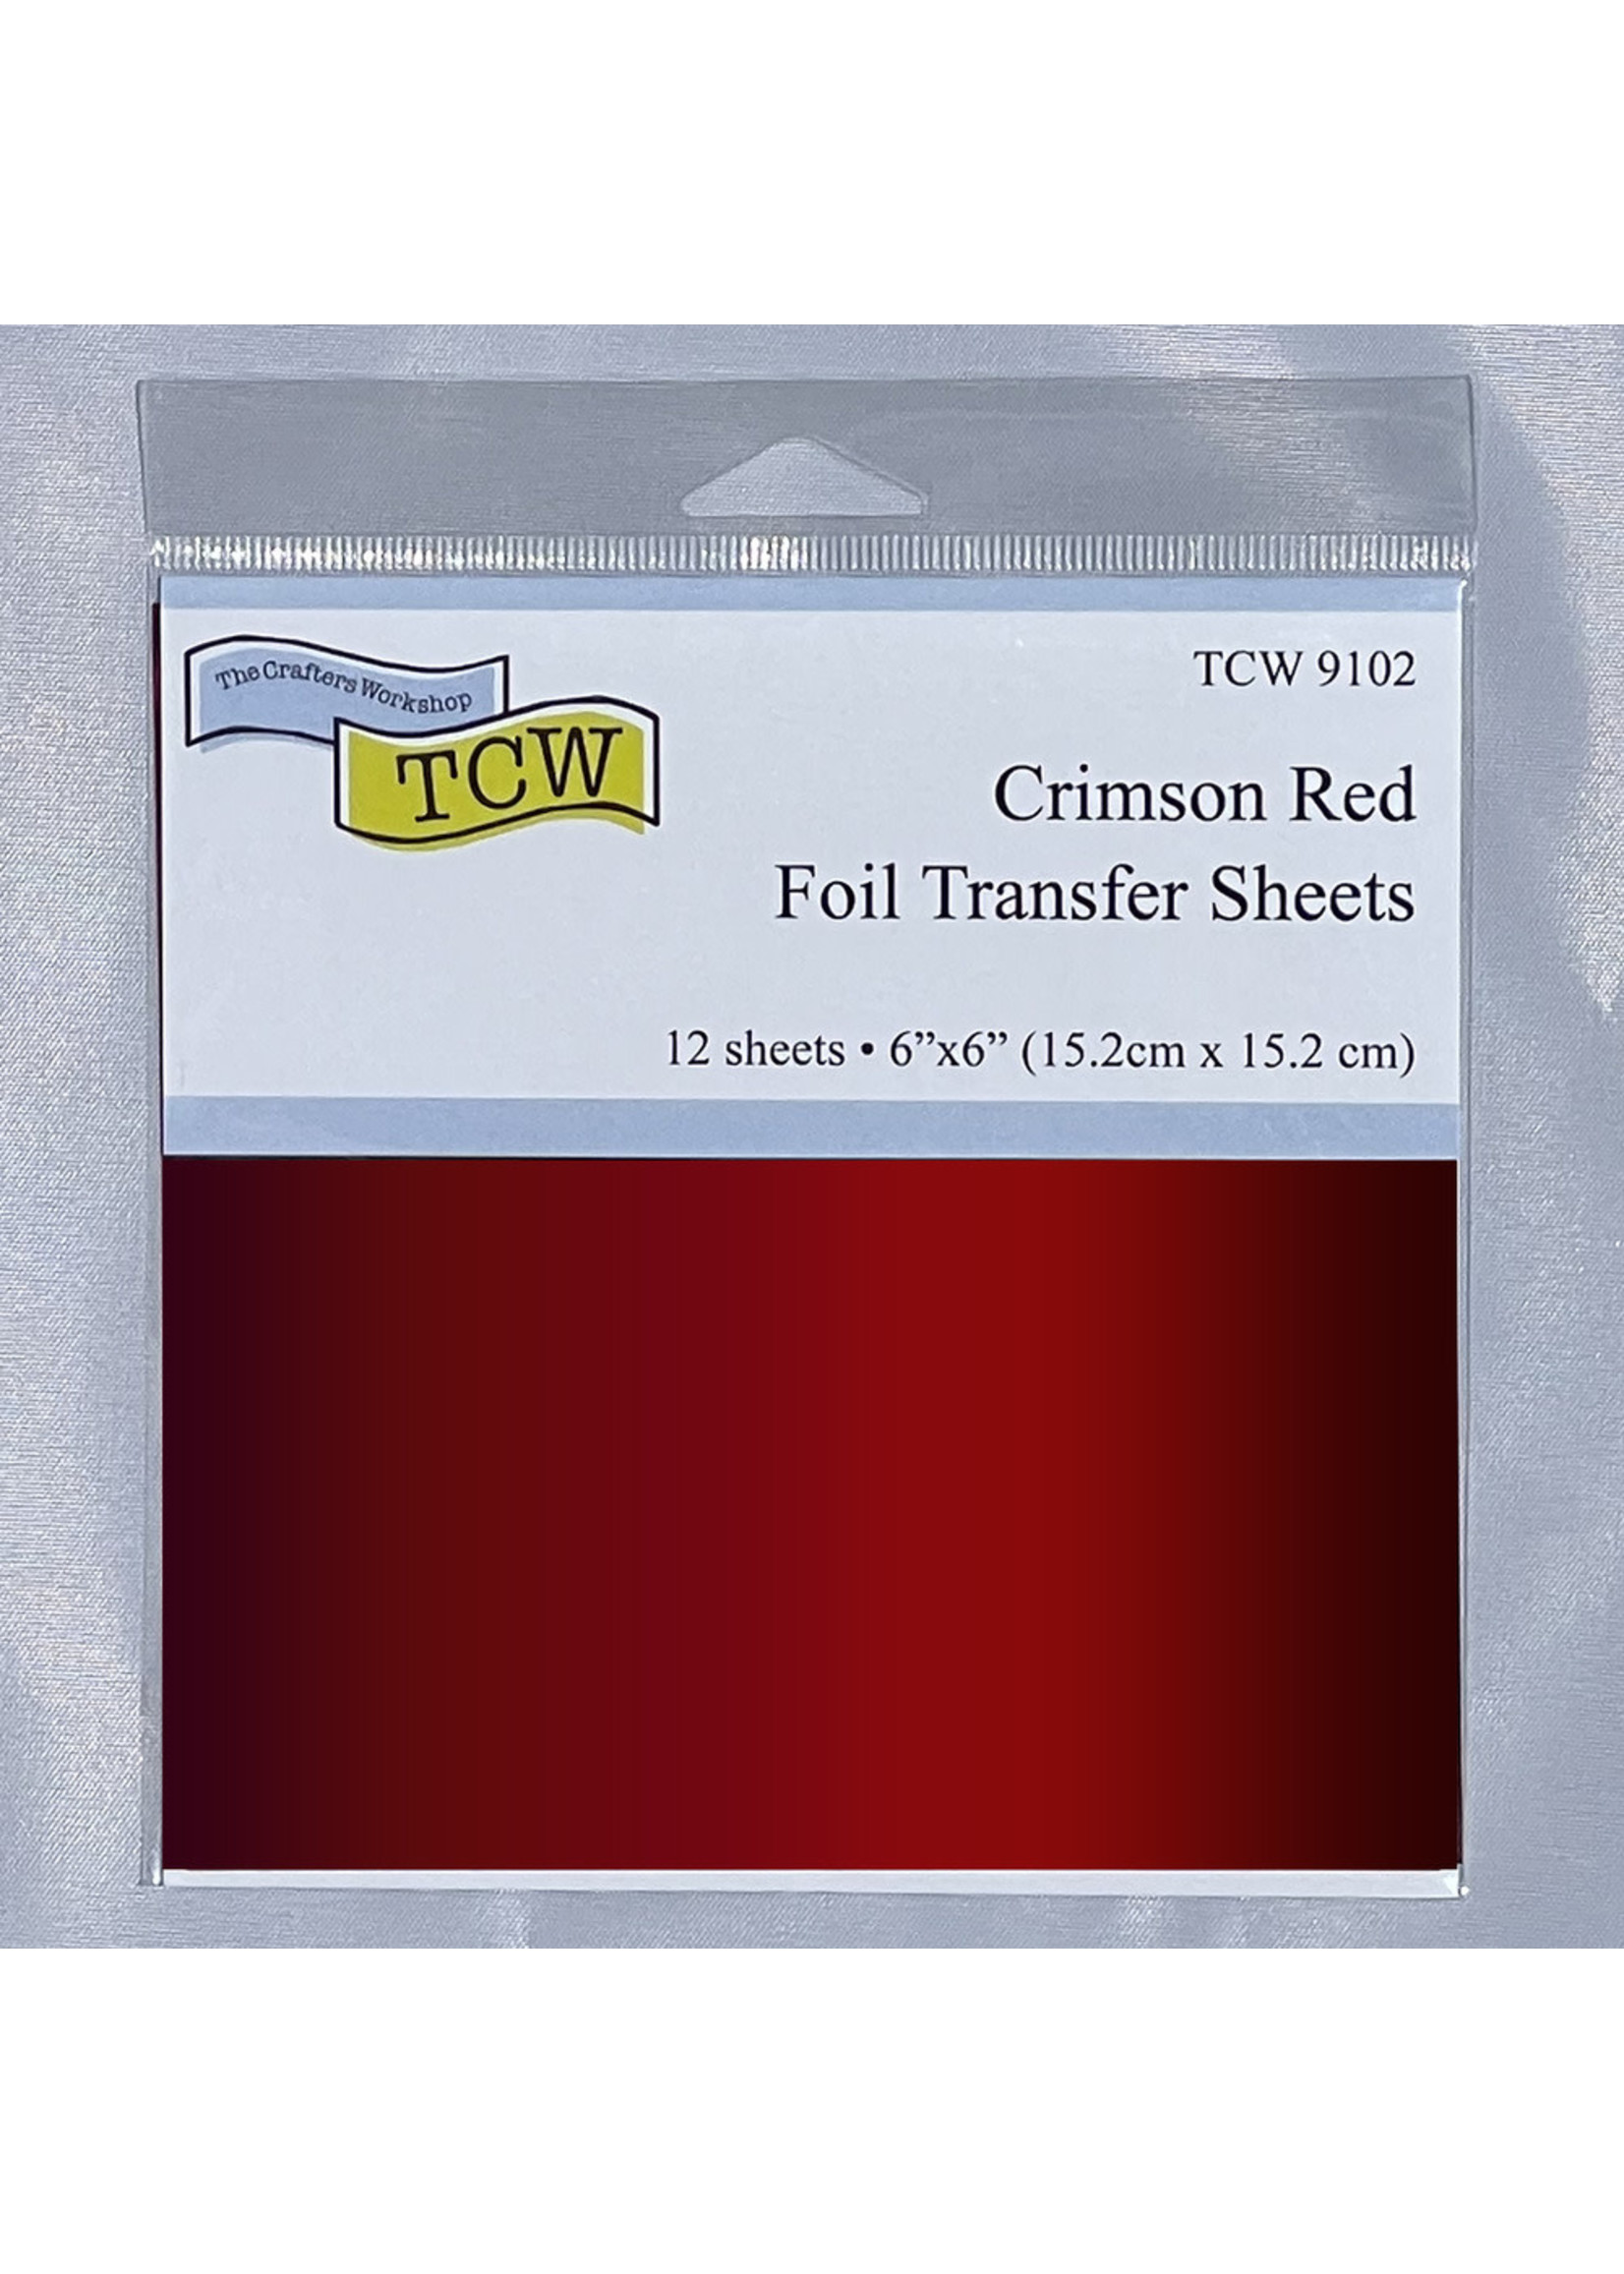 TCW Foil Transfer Sheets 6x6, Crimson Red (12)